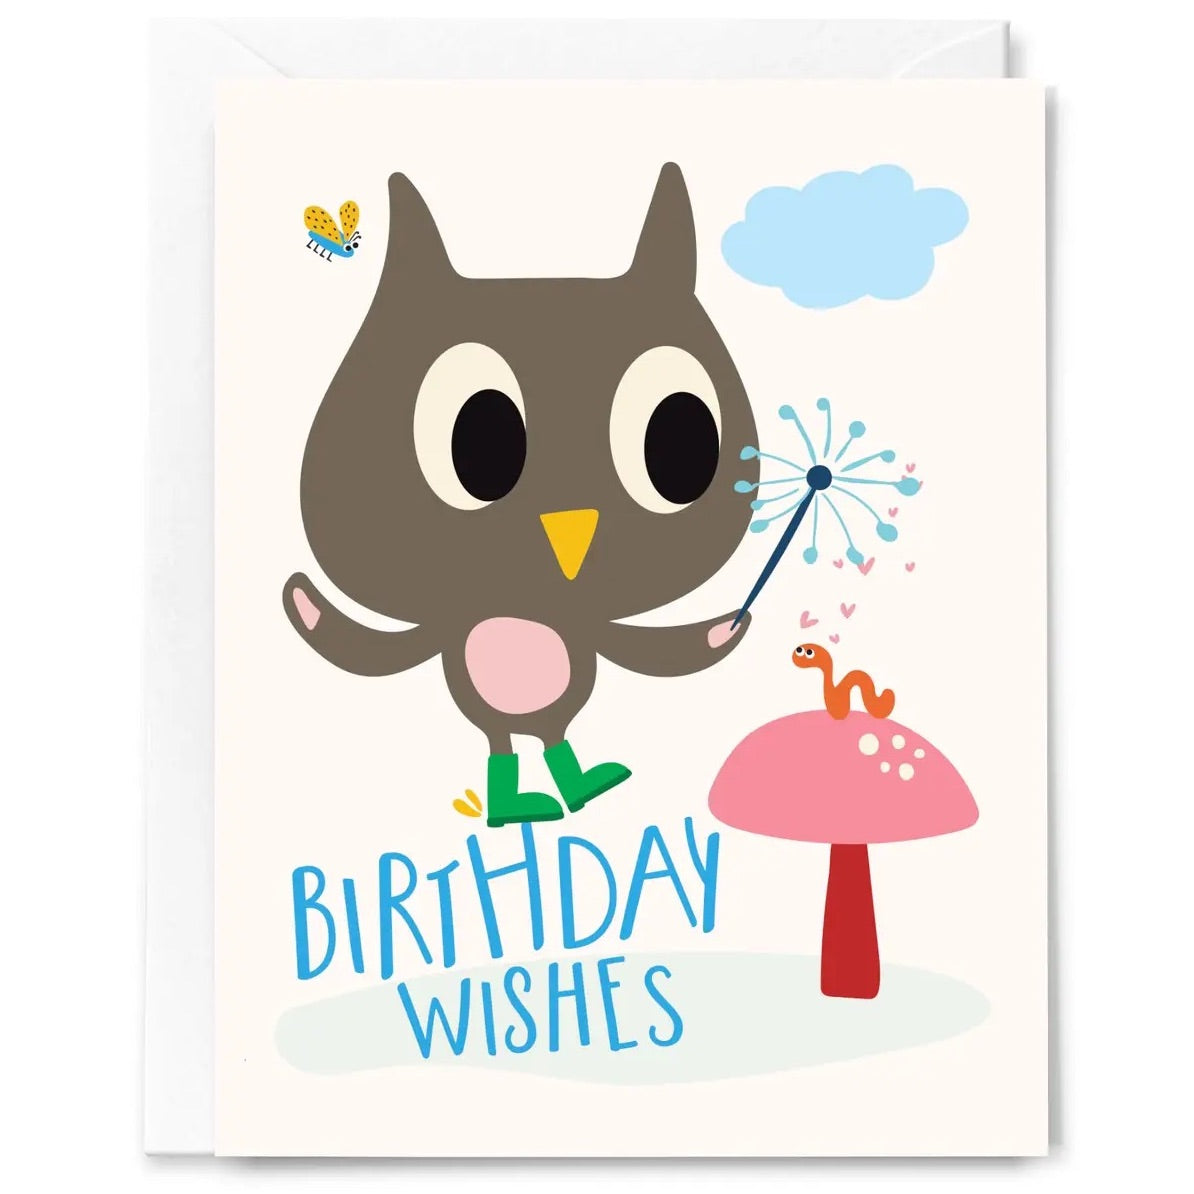 Owl Wishes Birthday Greeting Card